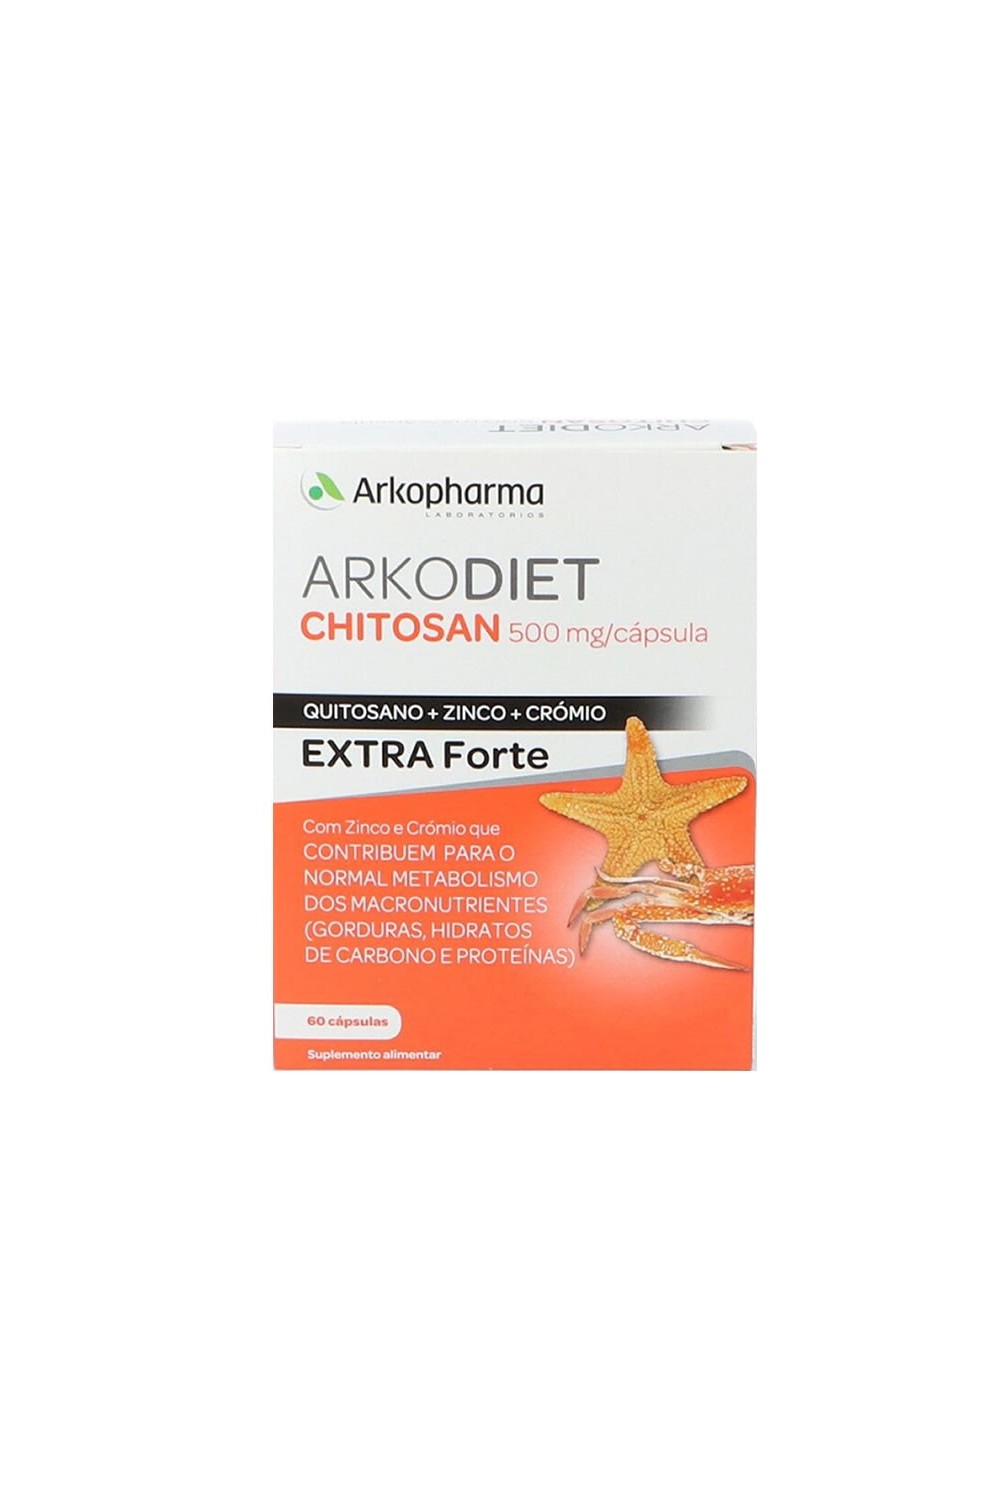 ARKOPHARMA - Arkodiet Chitosan Extraforte 500mg/capsule 60 Capsules